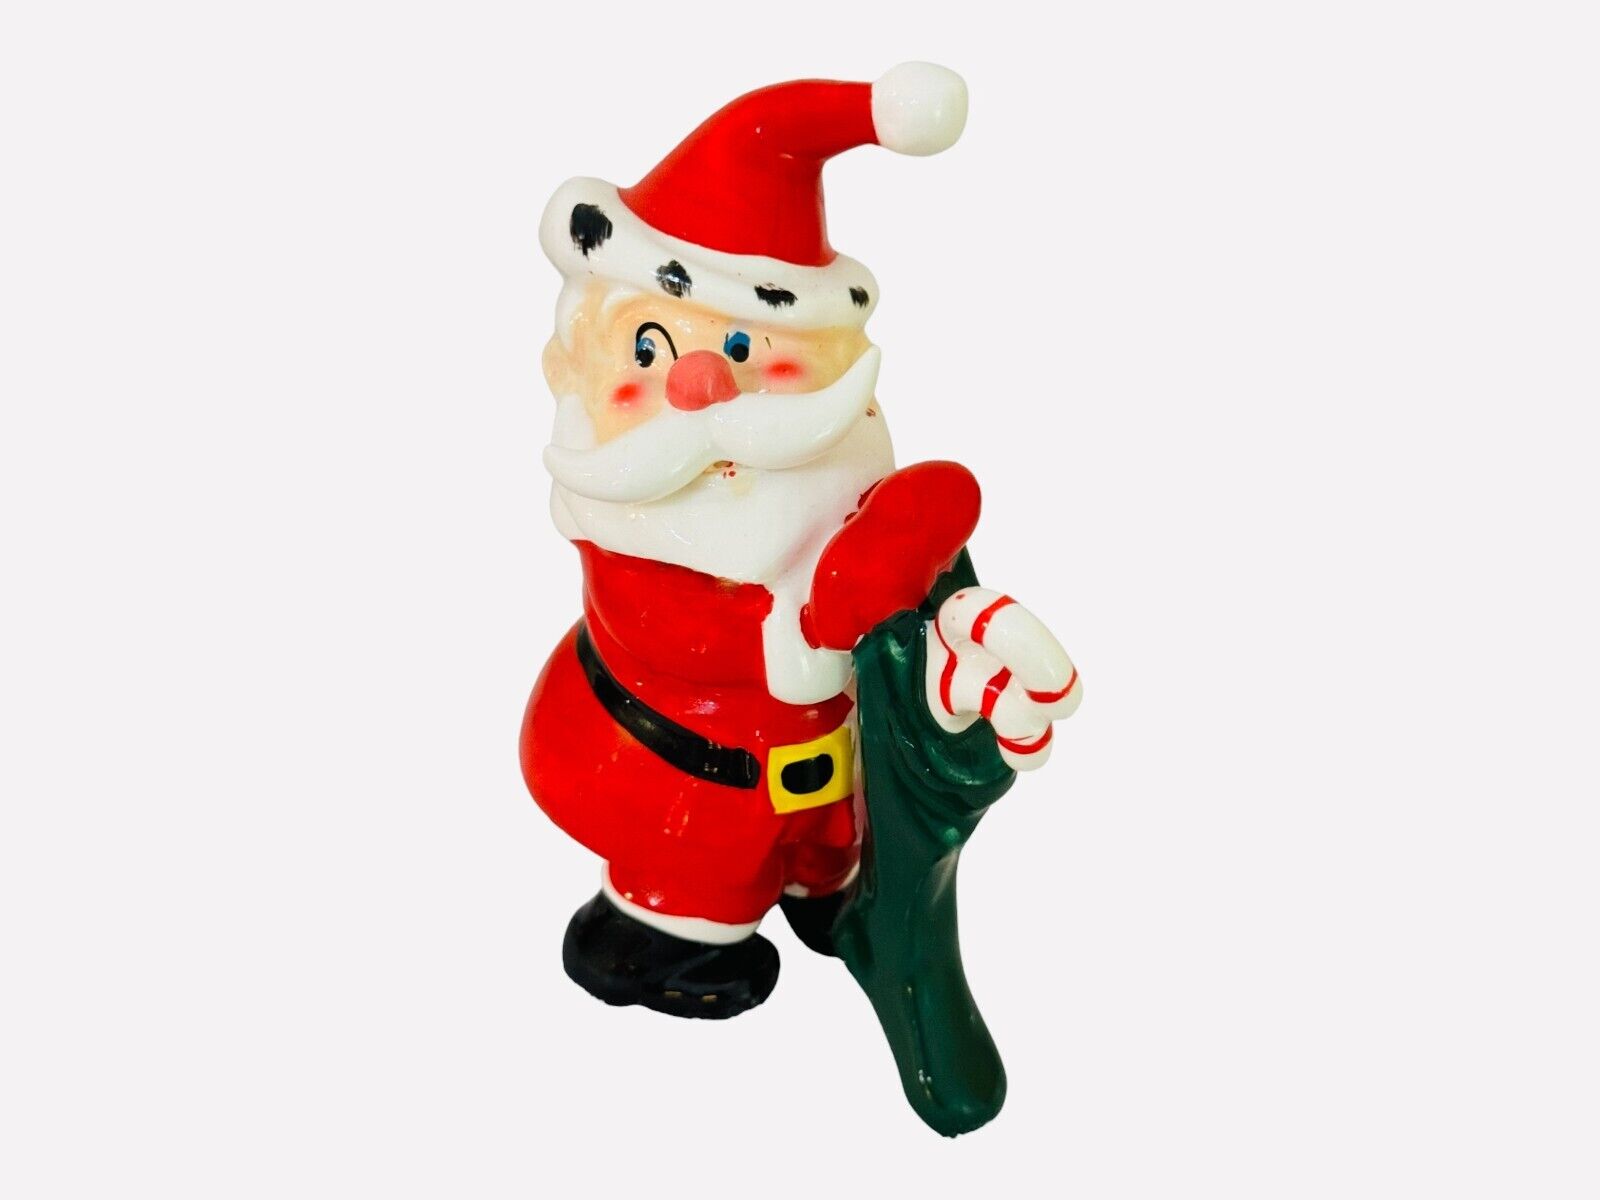 Vintage Christmas Kreiss Santa Claus Candy Cane Stocking Figurine 1950s MCM